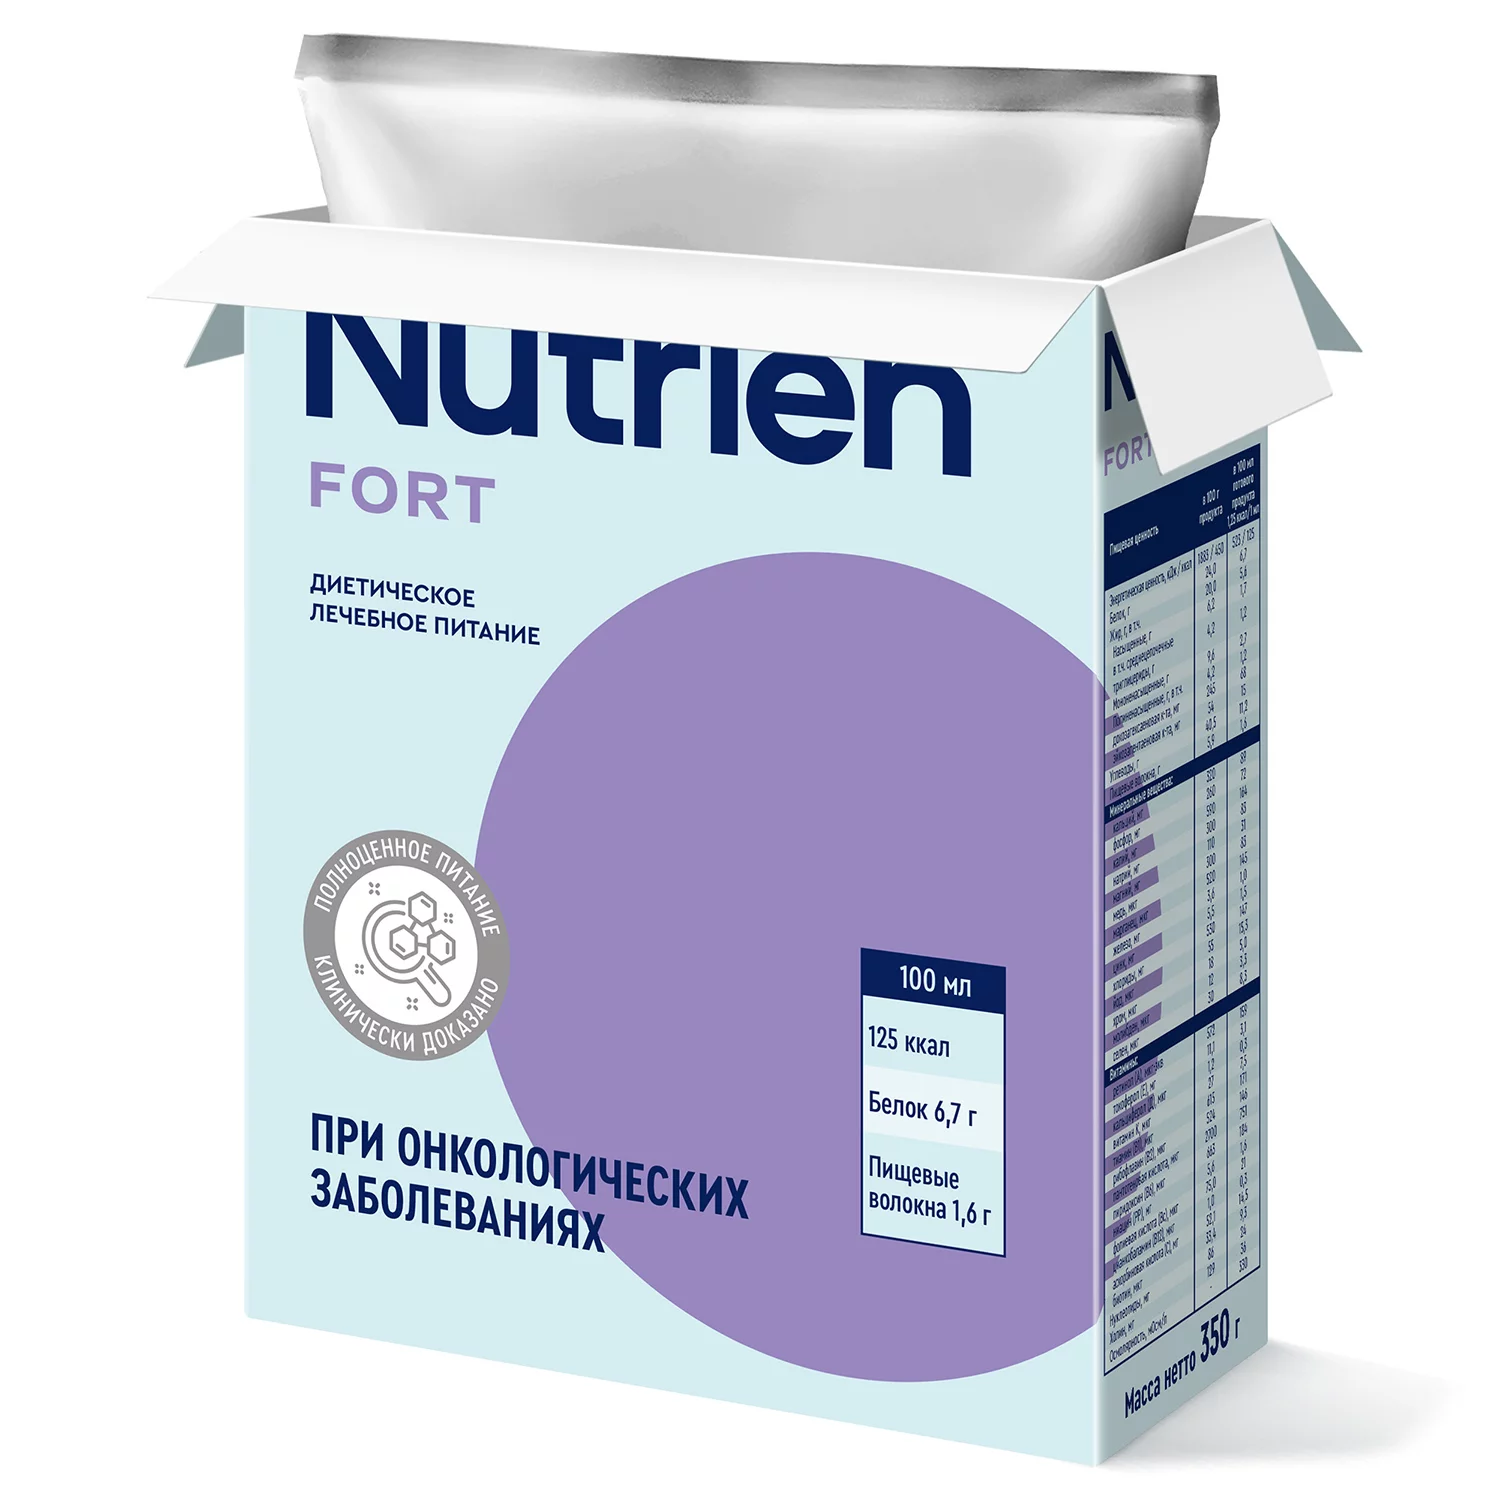 Nutrien Fort - 7